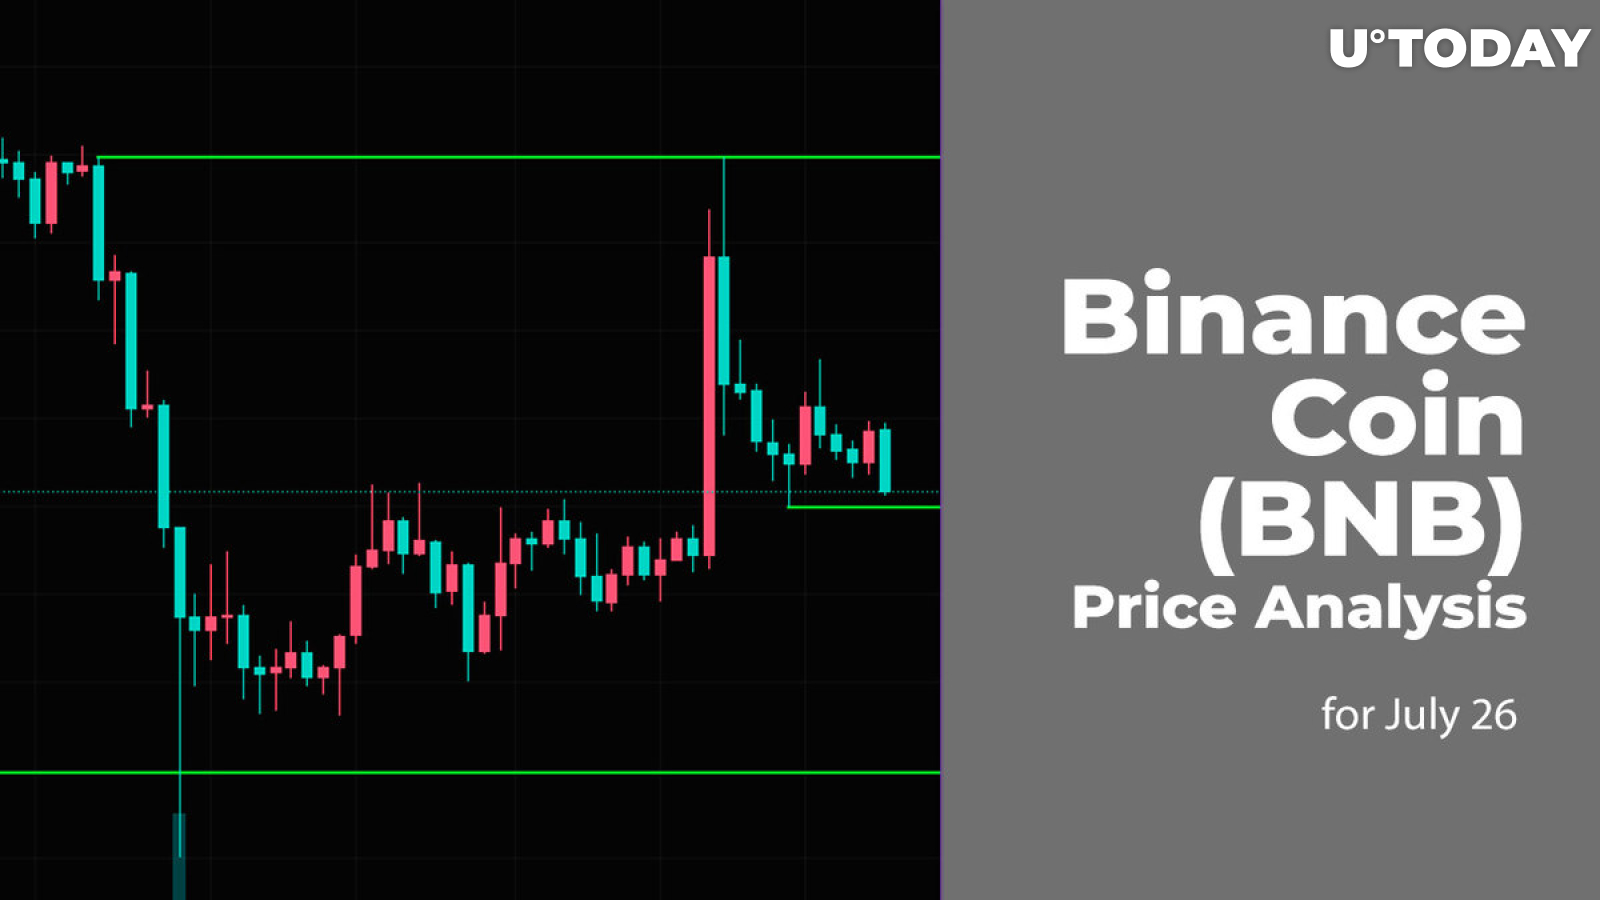 Binance Coin (BNB) Price Analysis for July 26